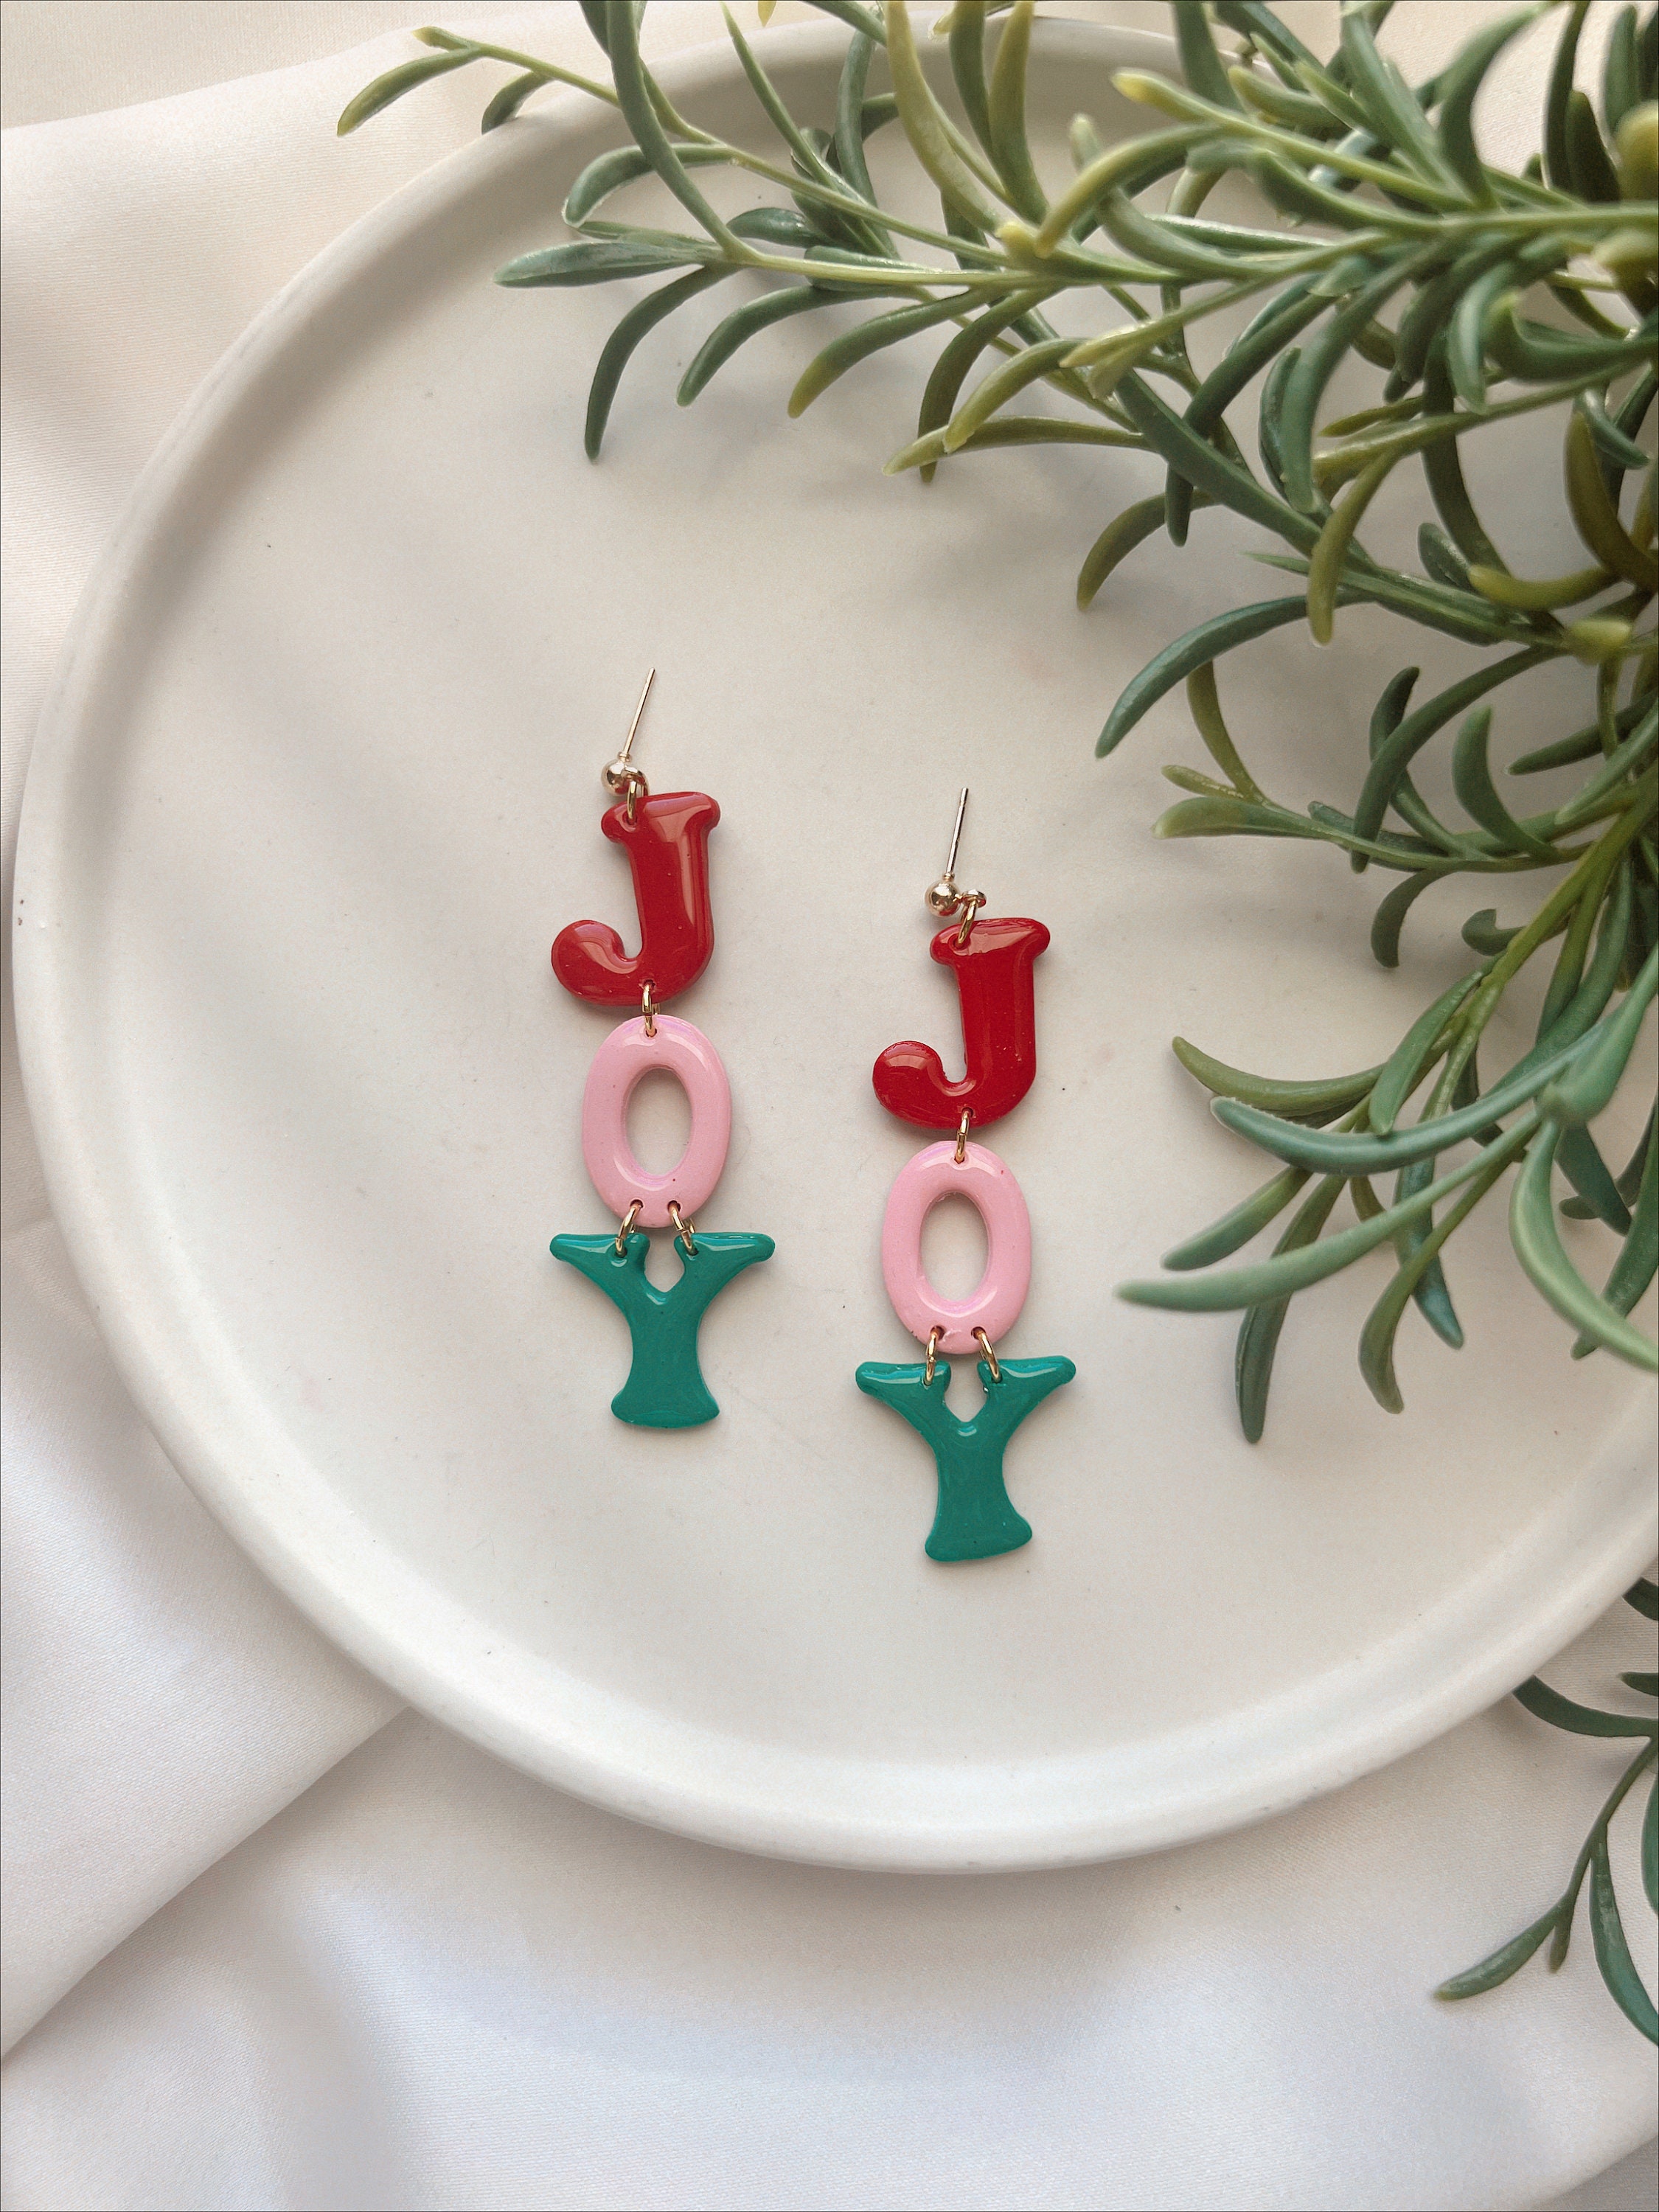 Joy Earrings | Clay Earrings | Polymer Clay Earrings | Christmas Earrings